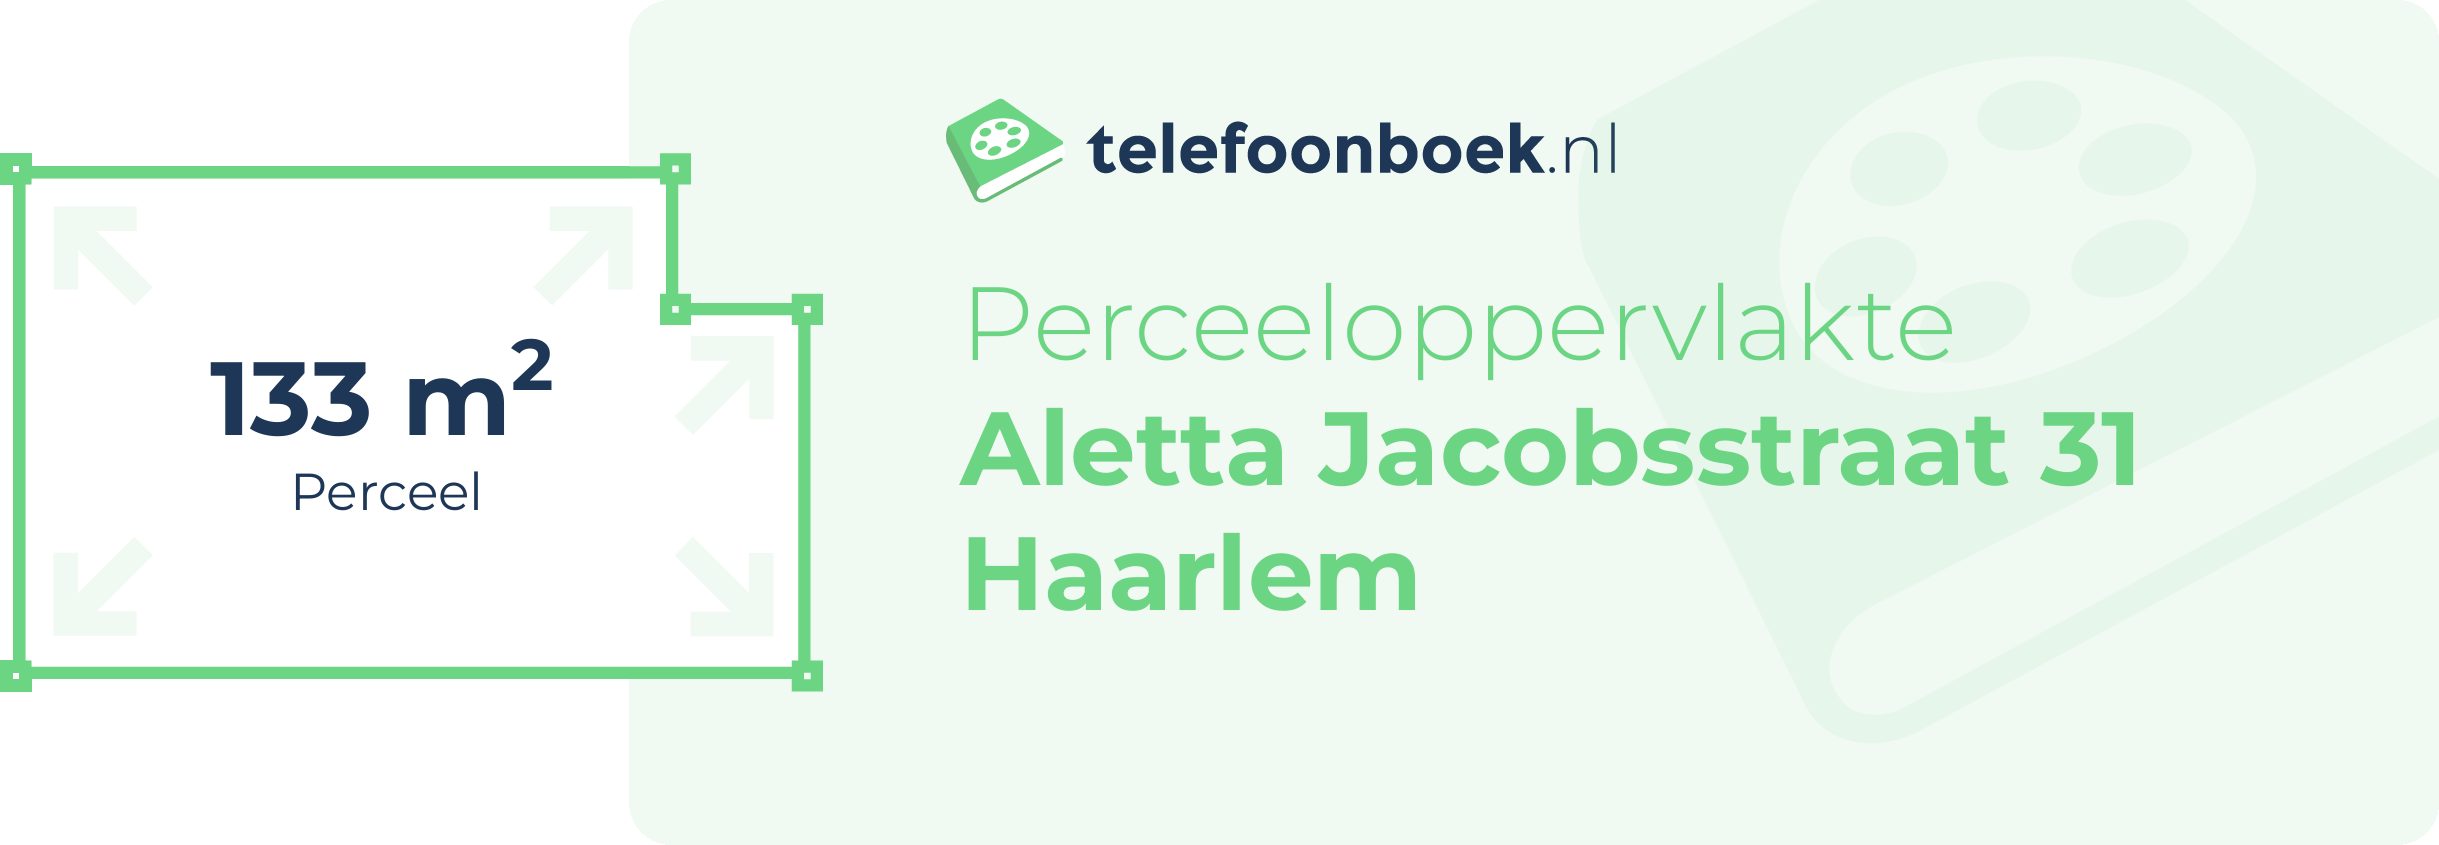 Perceeloppervlakte Aletta Jacobsstraat 31 Haarlem